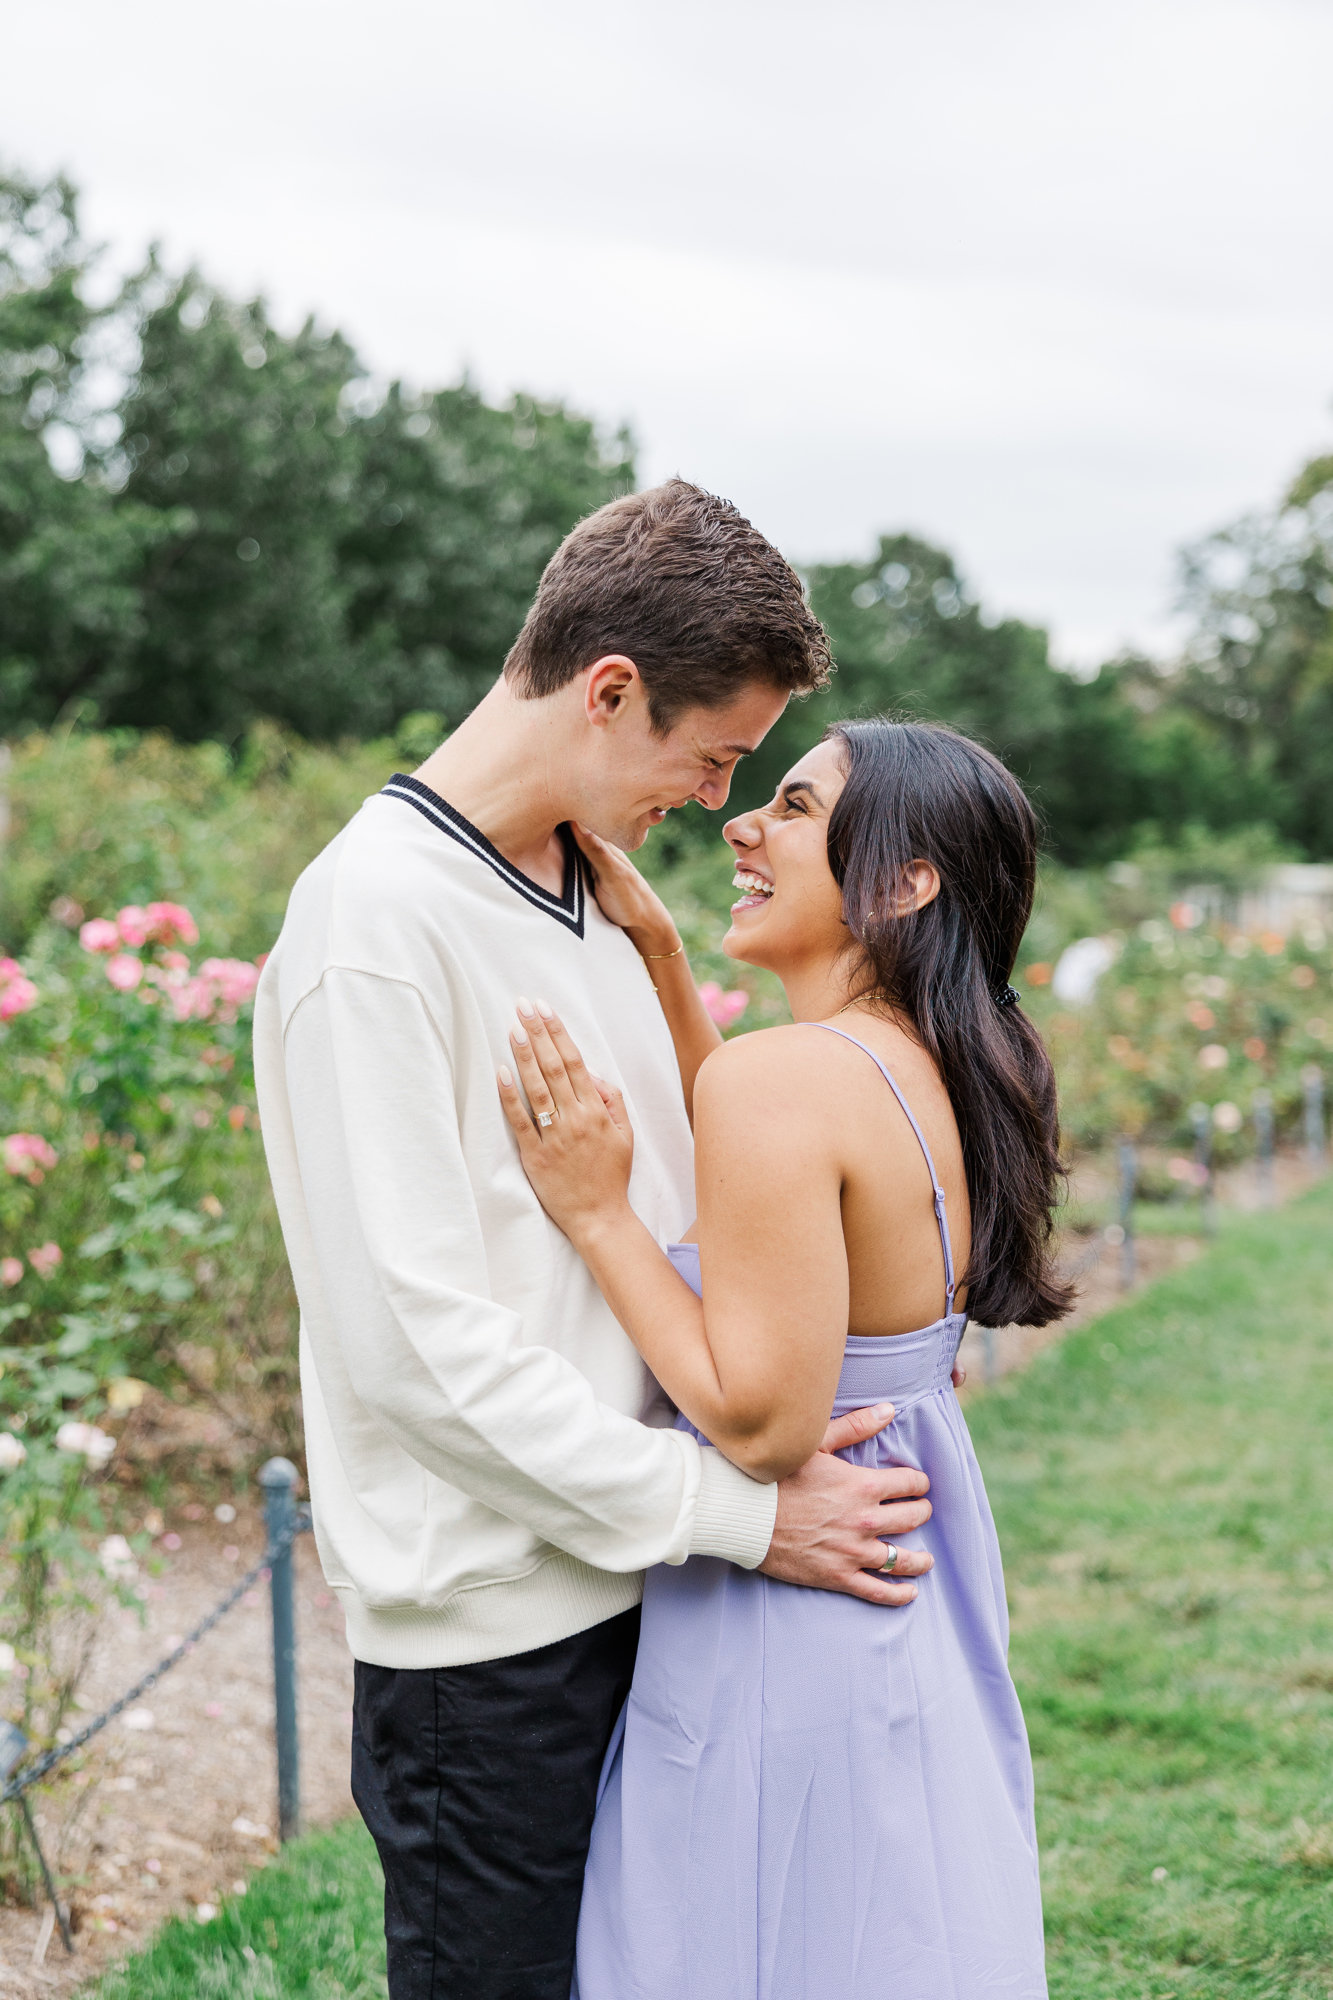 Perfect Proposal Photos in the Rose Garden at Brooklyn Botanic Garden